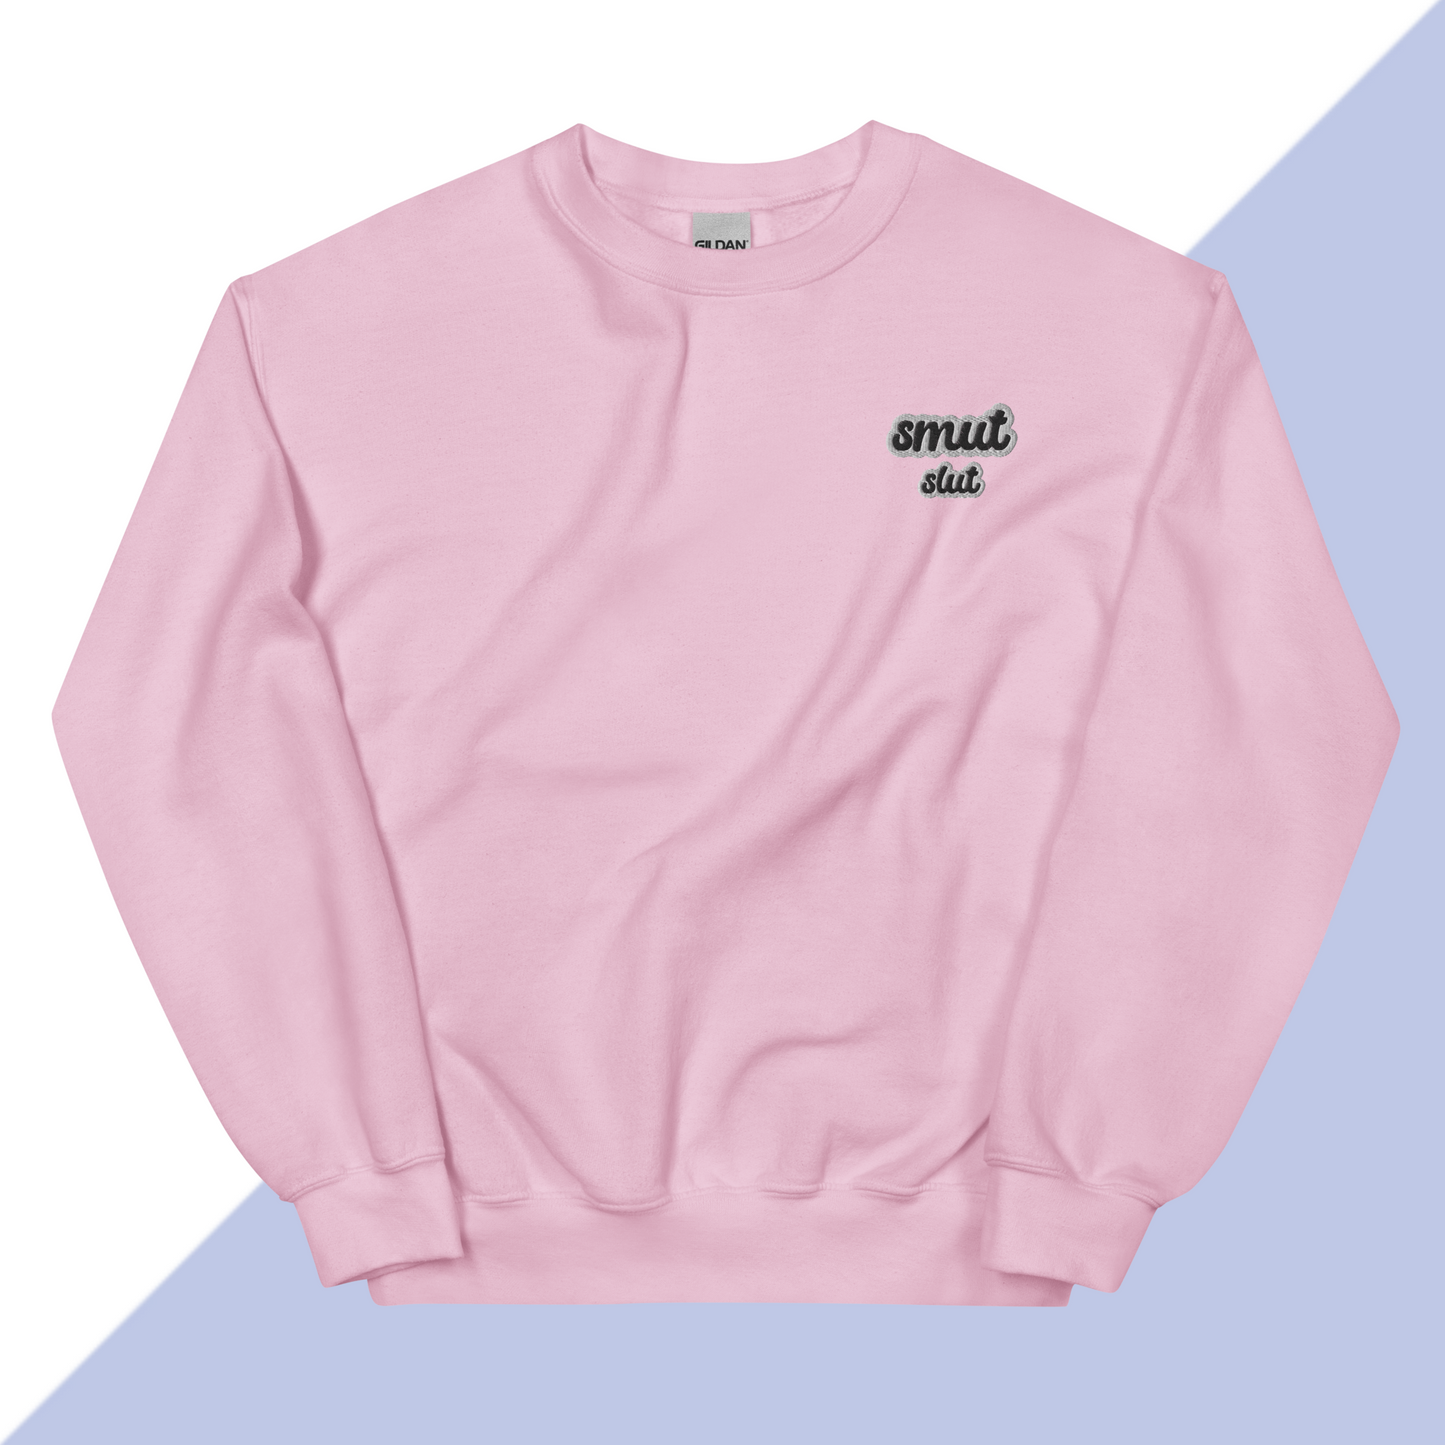 SMUT SLUT - Embroidered Unisex Sweatshirt